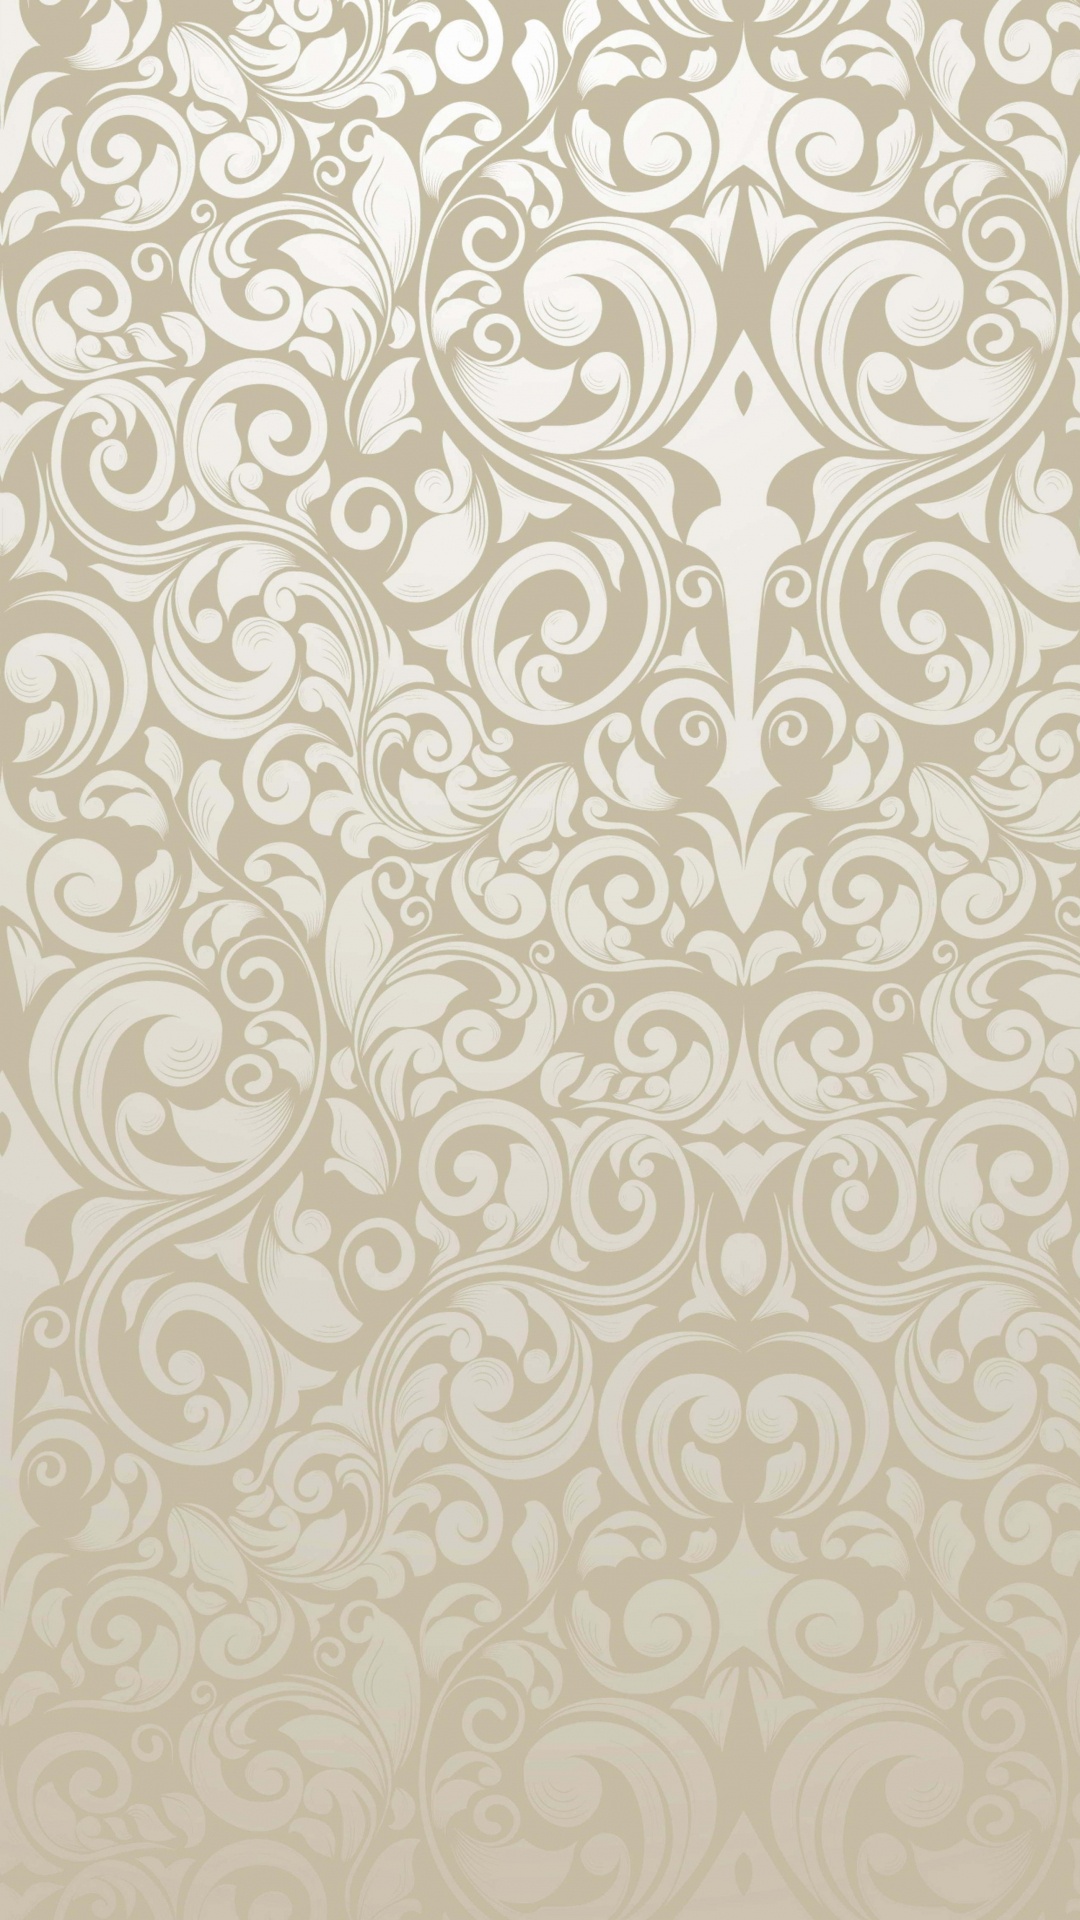 Textil Floral Blanco y Negro. Wallpaper in 1080x1920 Resolution